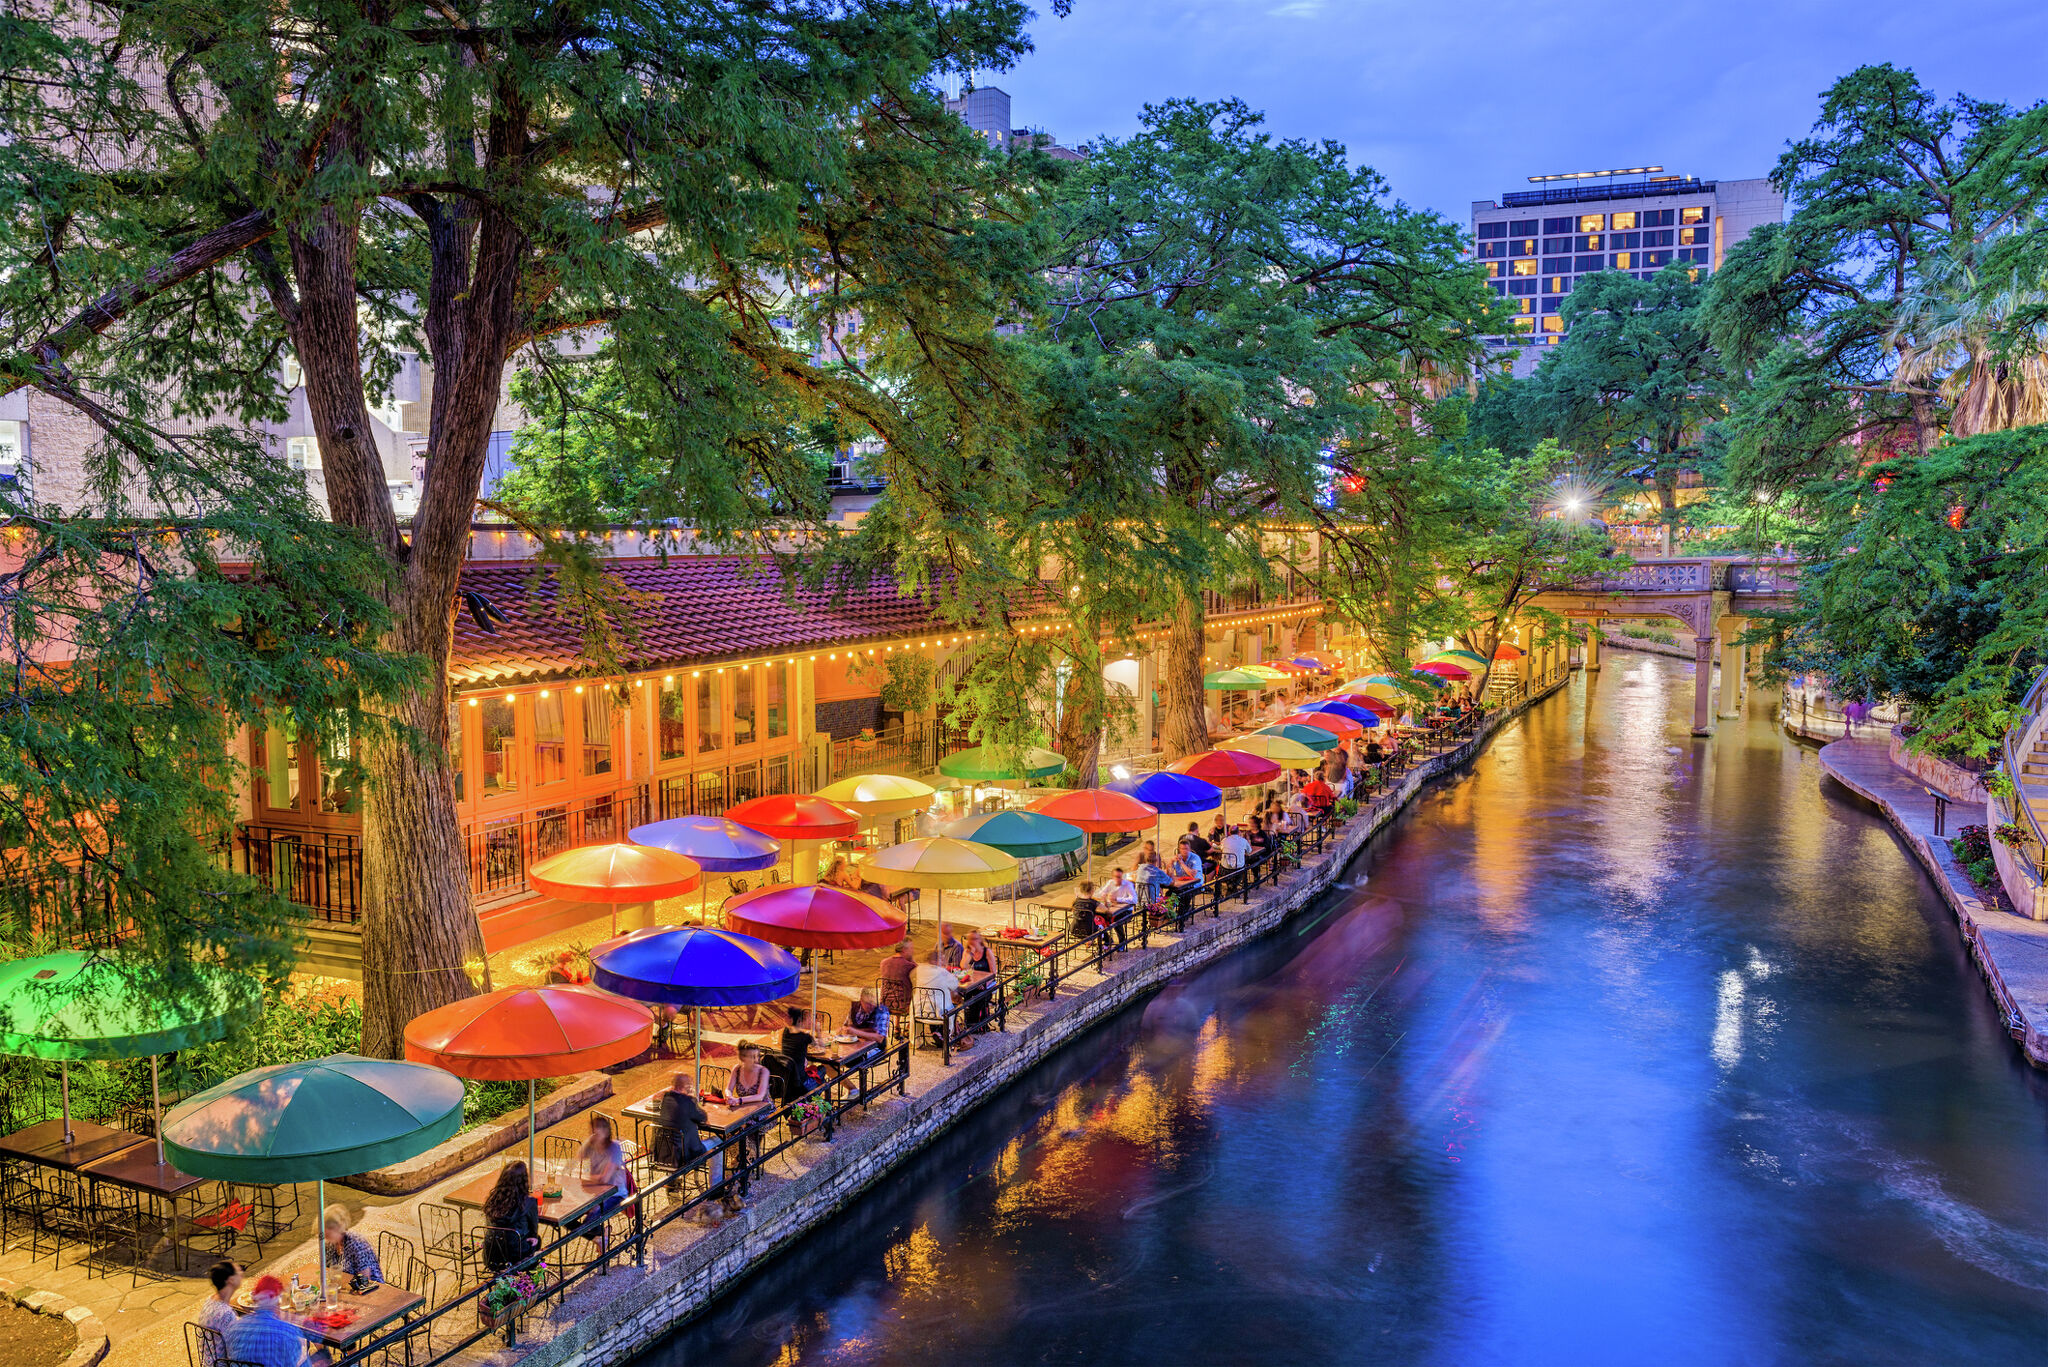 San Antonio listed on Condé Nast Traveler's best travel spots